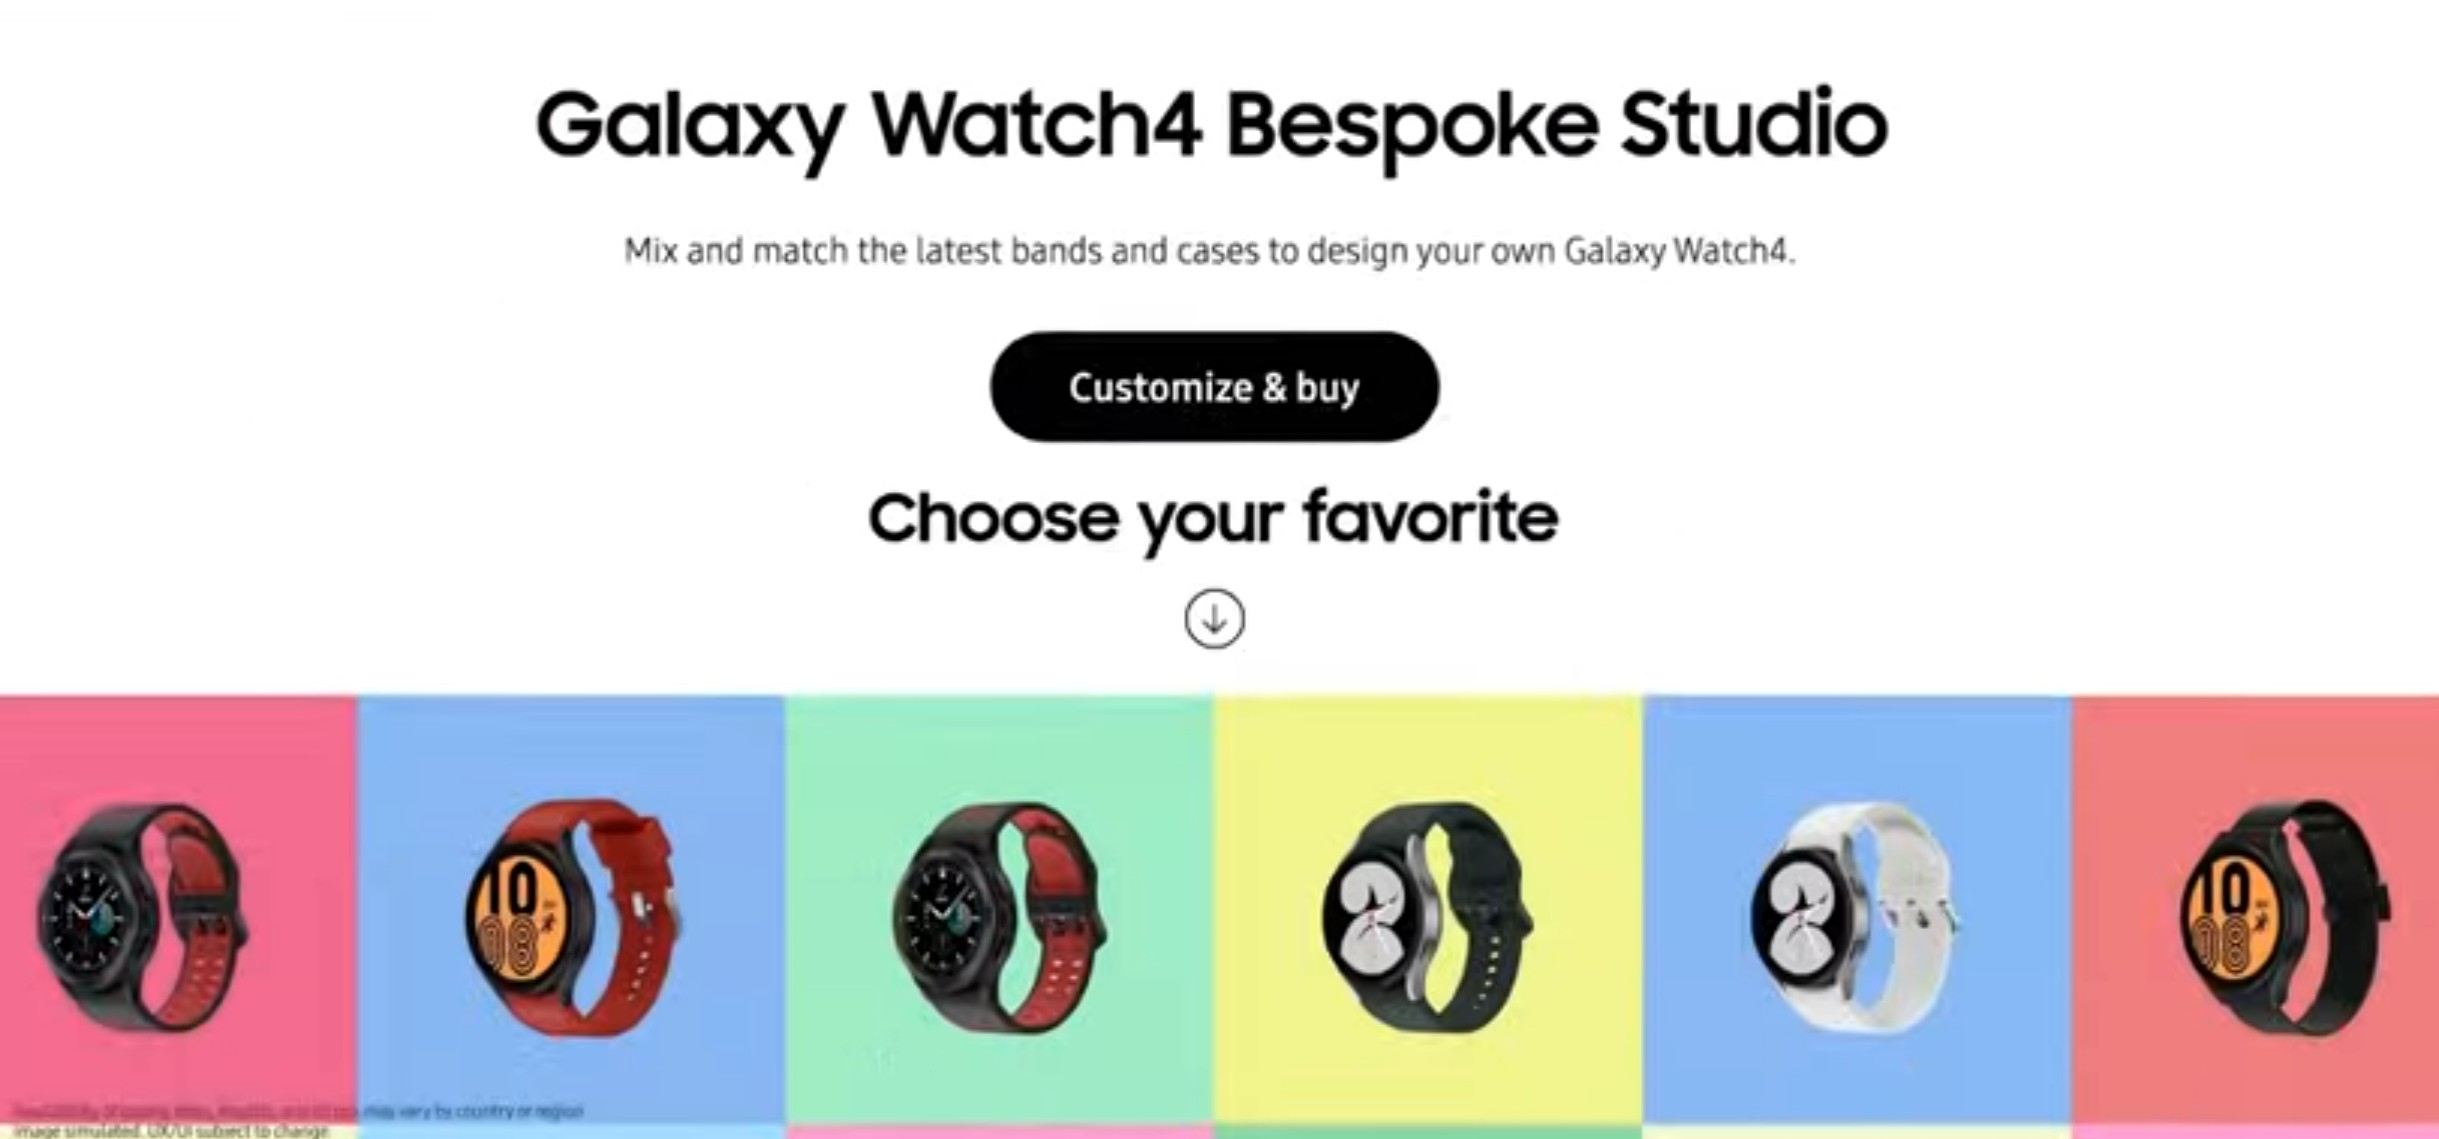 Galaxy Watch4 Bespoke Studio